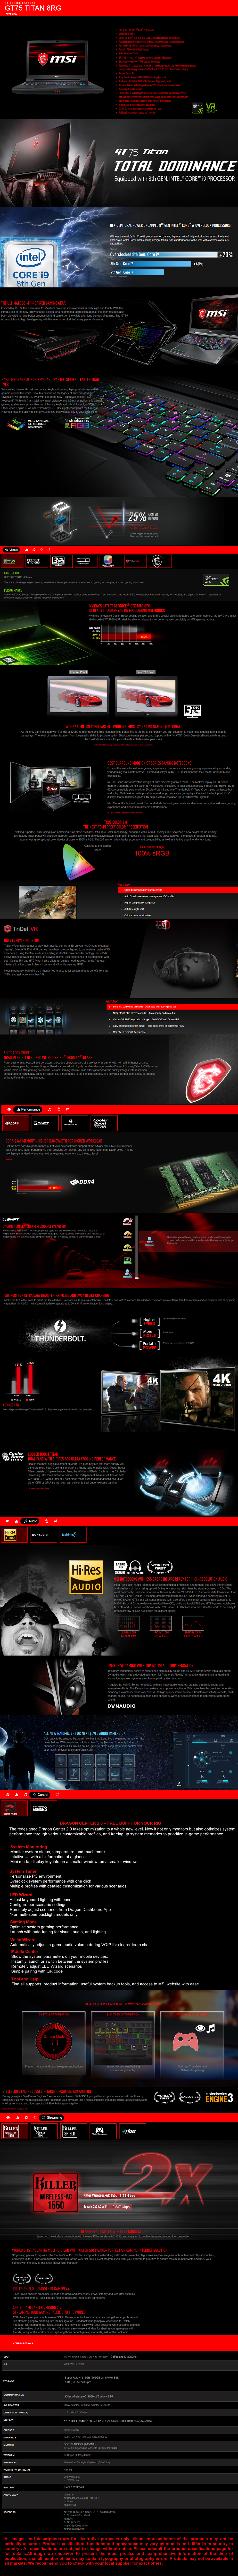 Buy Online MSI GT75 Titan 8RG 17.3inch 4K Gaming Laptop (Core i9-8950HK, 32GB, 512GB SSD, 1TB, GTX 1080 8GB, Windows 10)